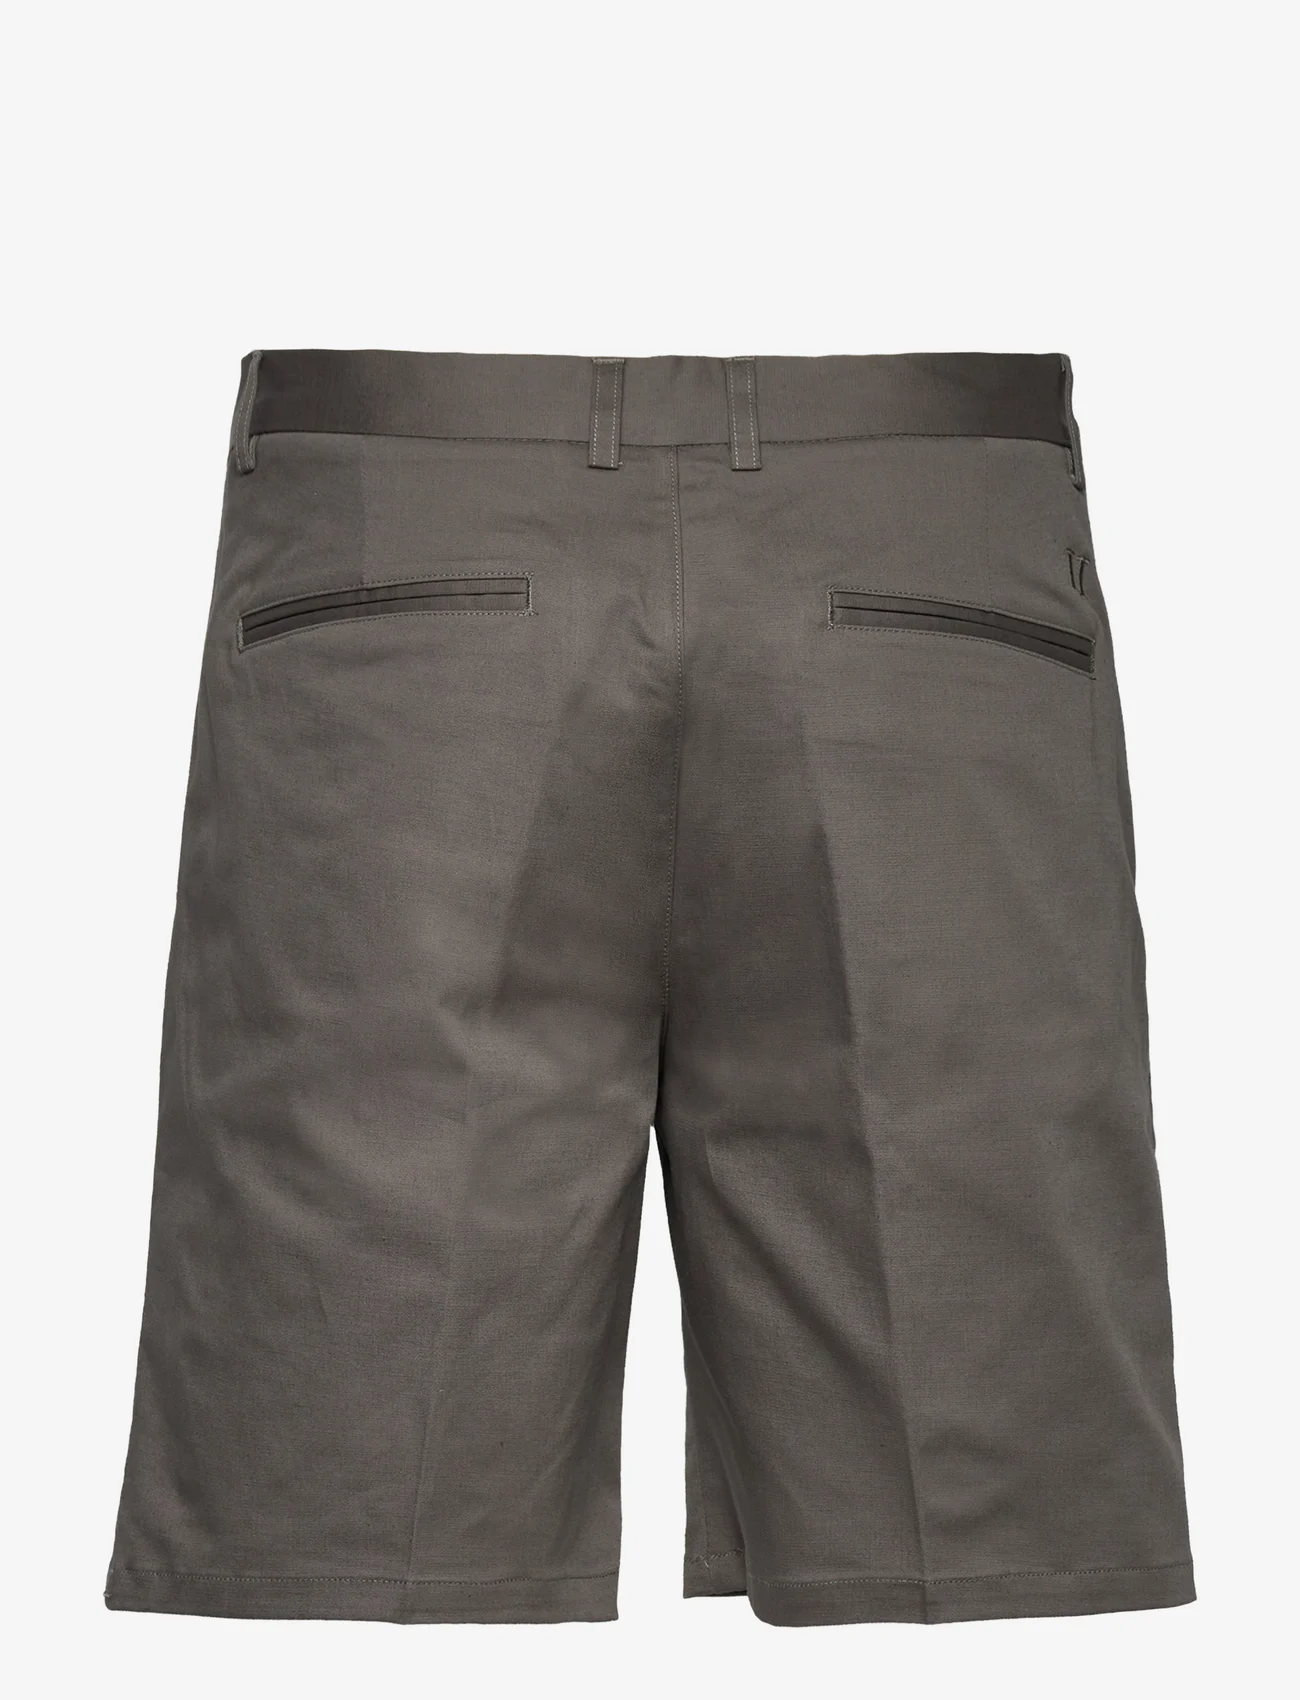 Les Deux - Como Reg Cotton-Linen Shorts - chino lühikesed püksid - raven - 1